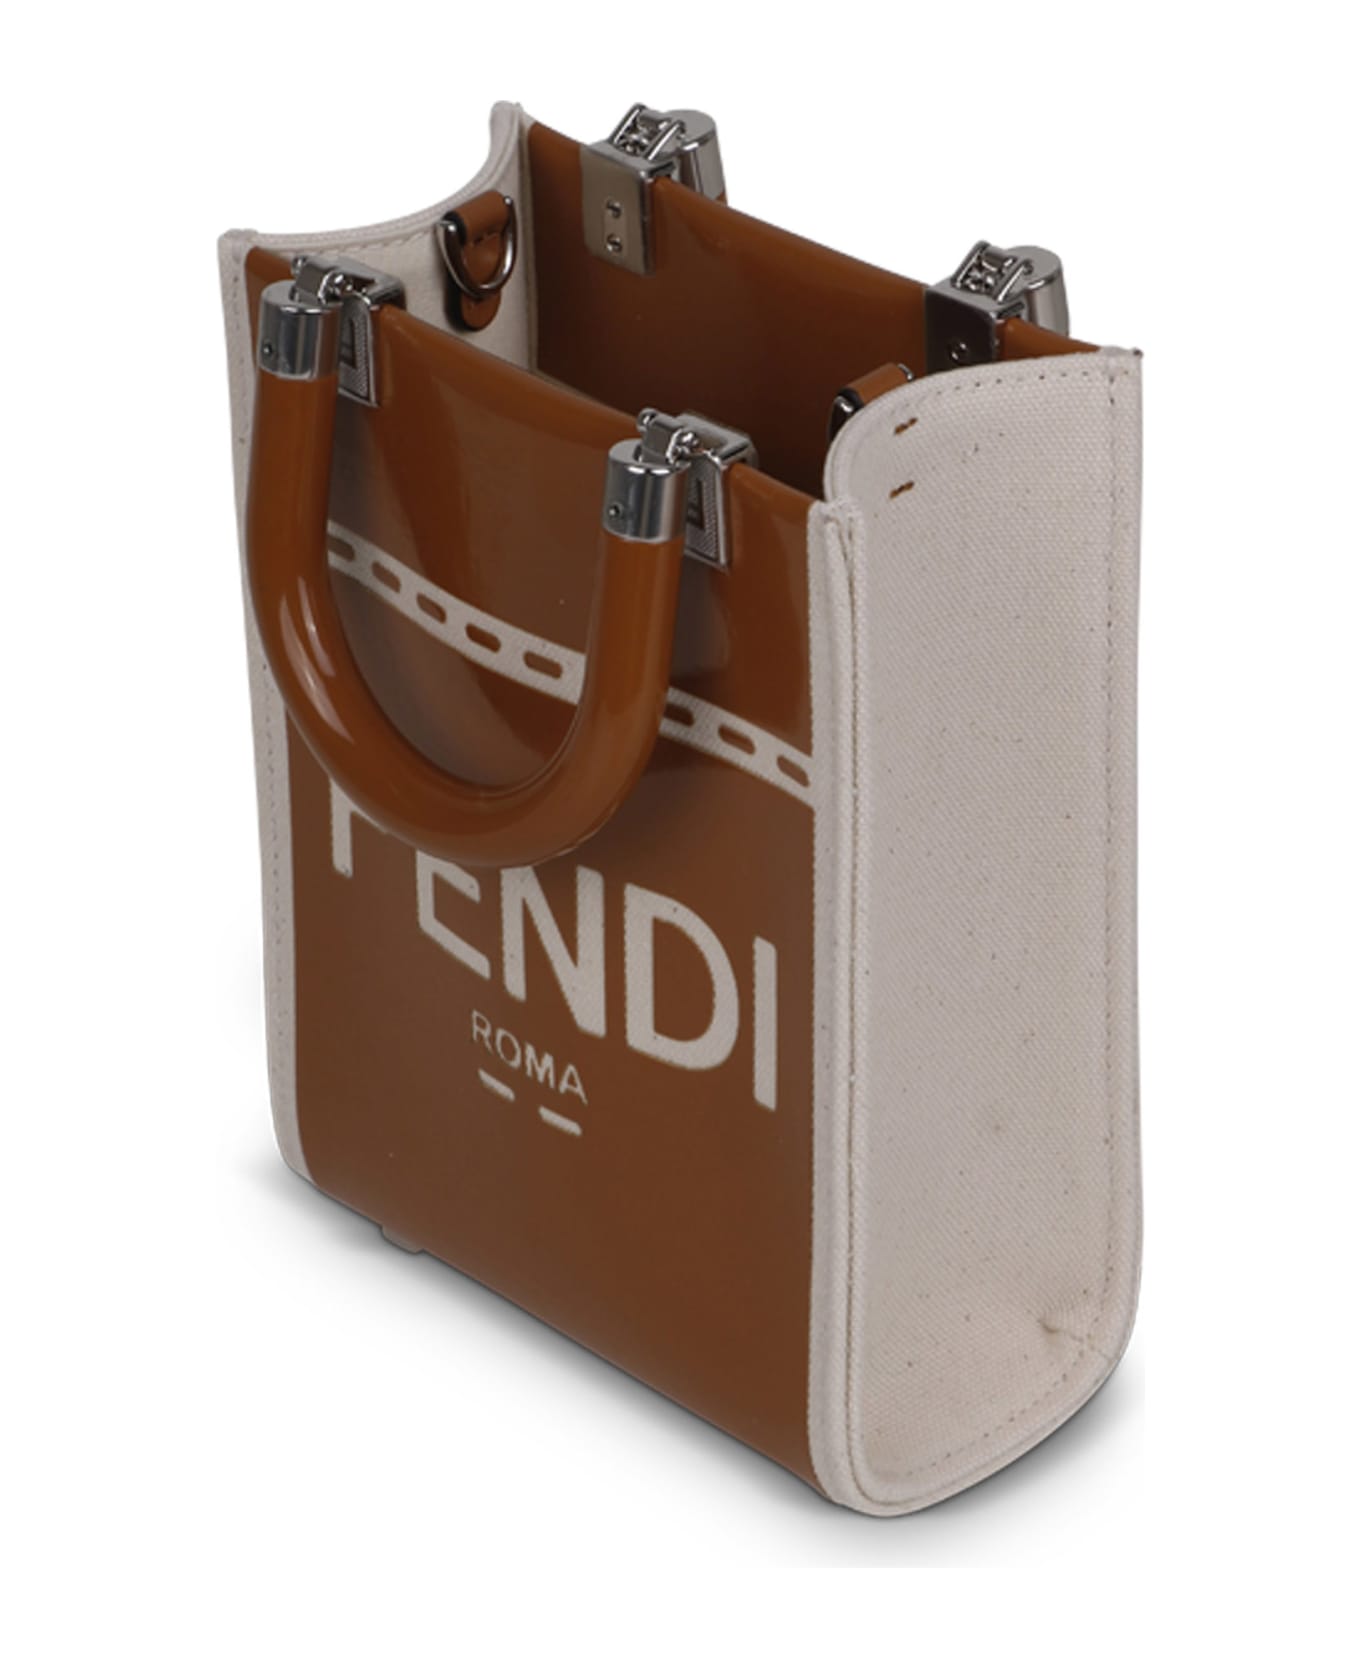 Fendi Sunshine Mini Bag In HGKRI2 And Patent Leather